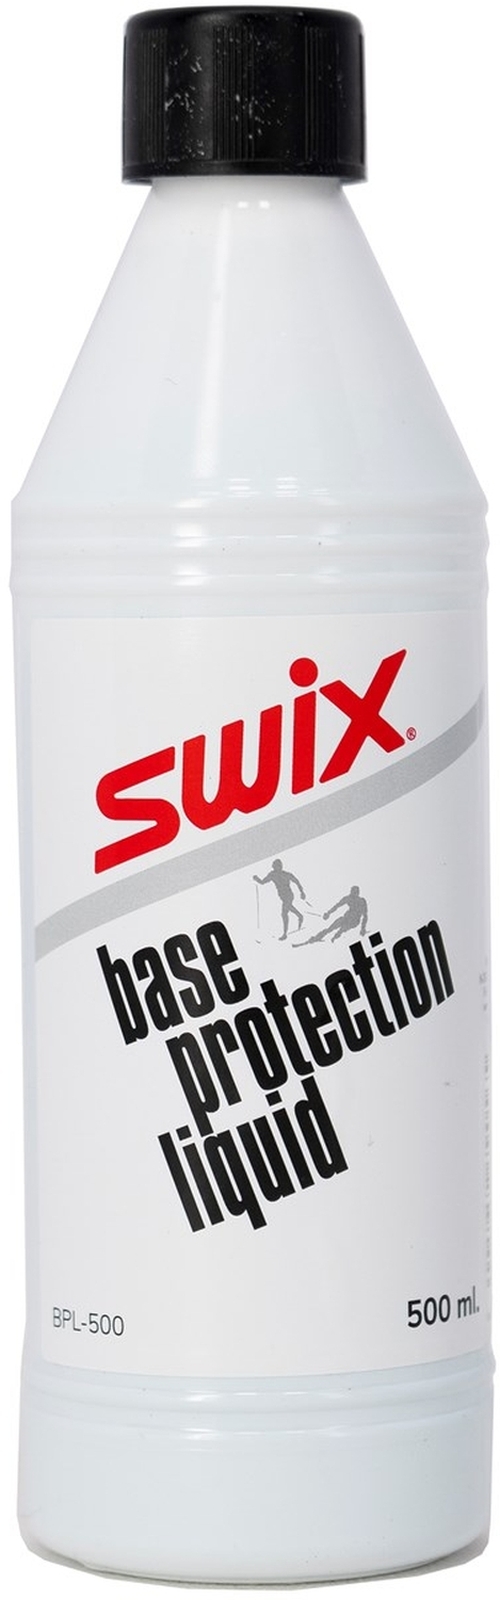 E-shop Swix BPL-500 Base Protection Liquid - 500ml uni